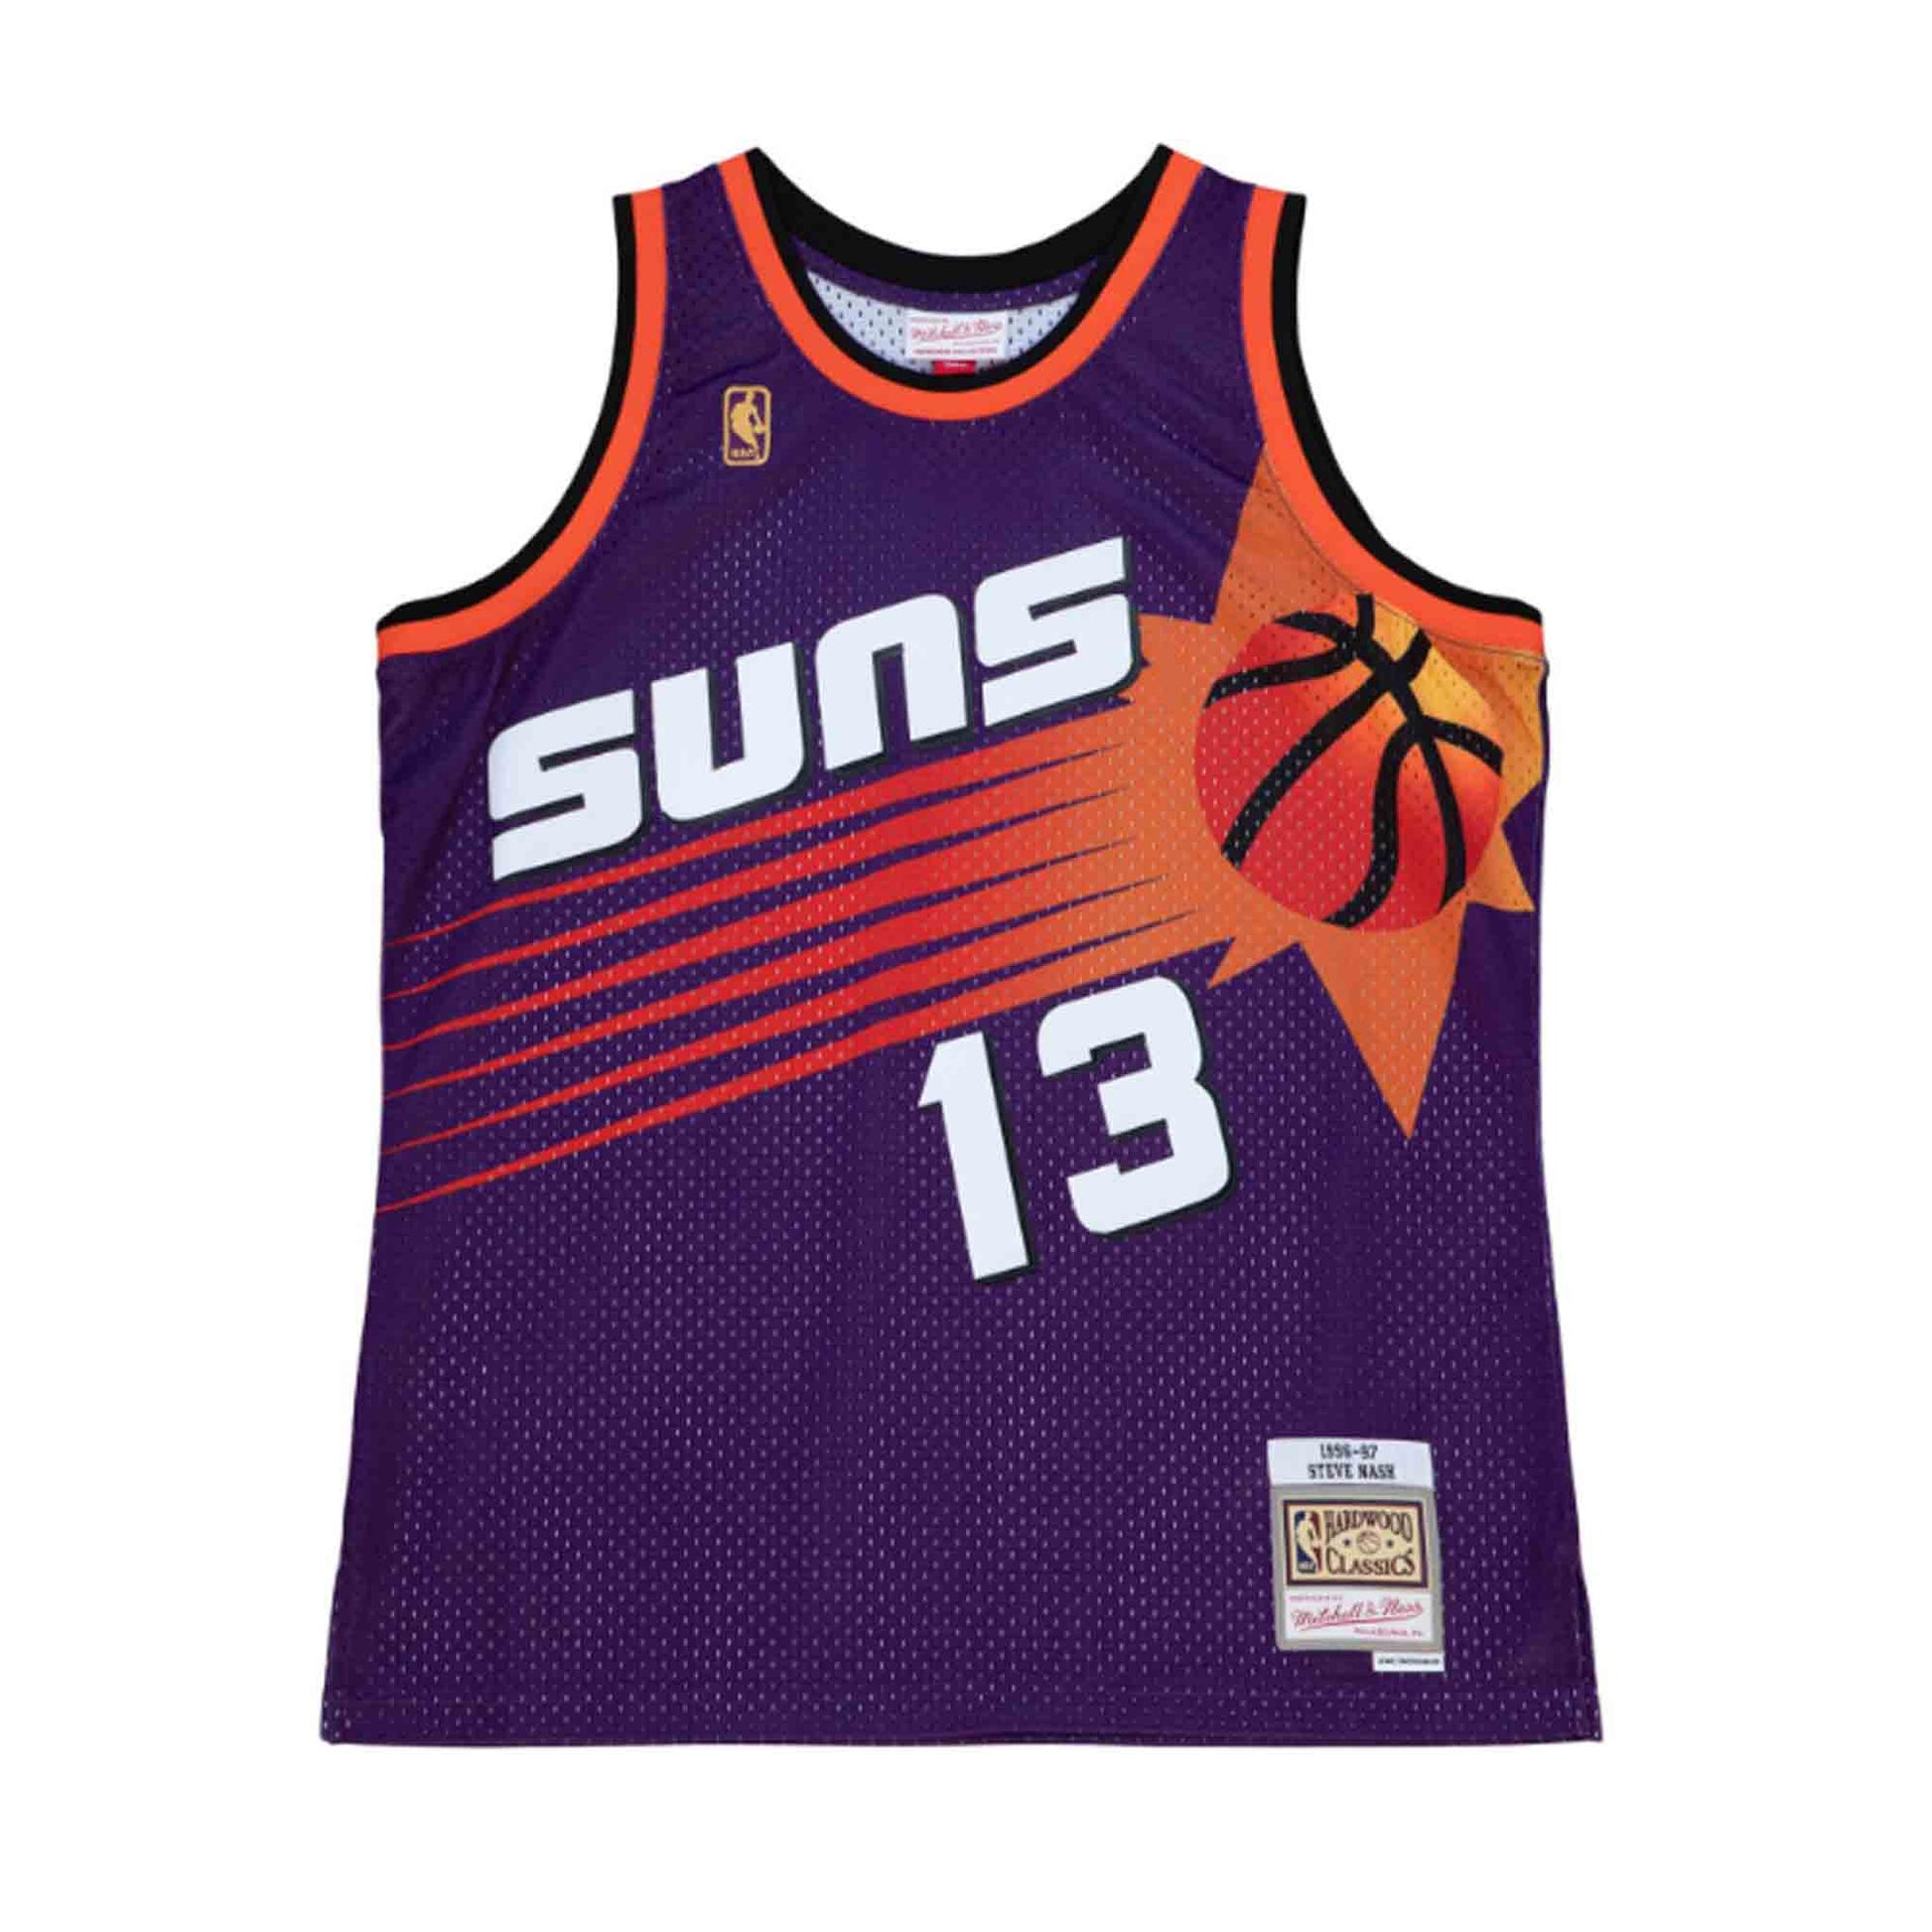 13 STEVE NASH Phoenix Suns NBA Guard Purple Throwback Jersey